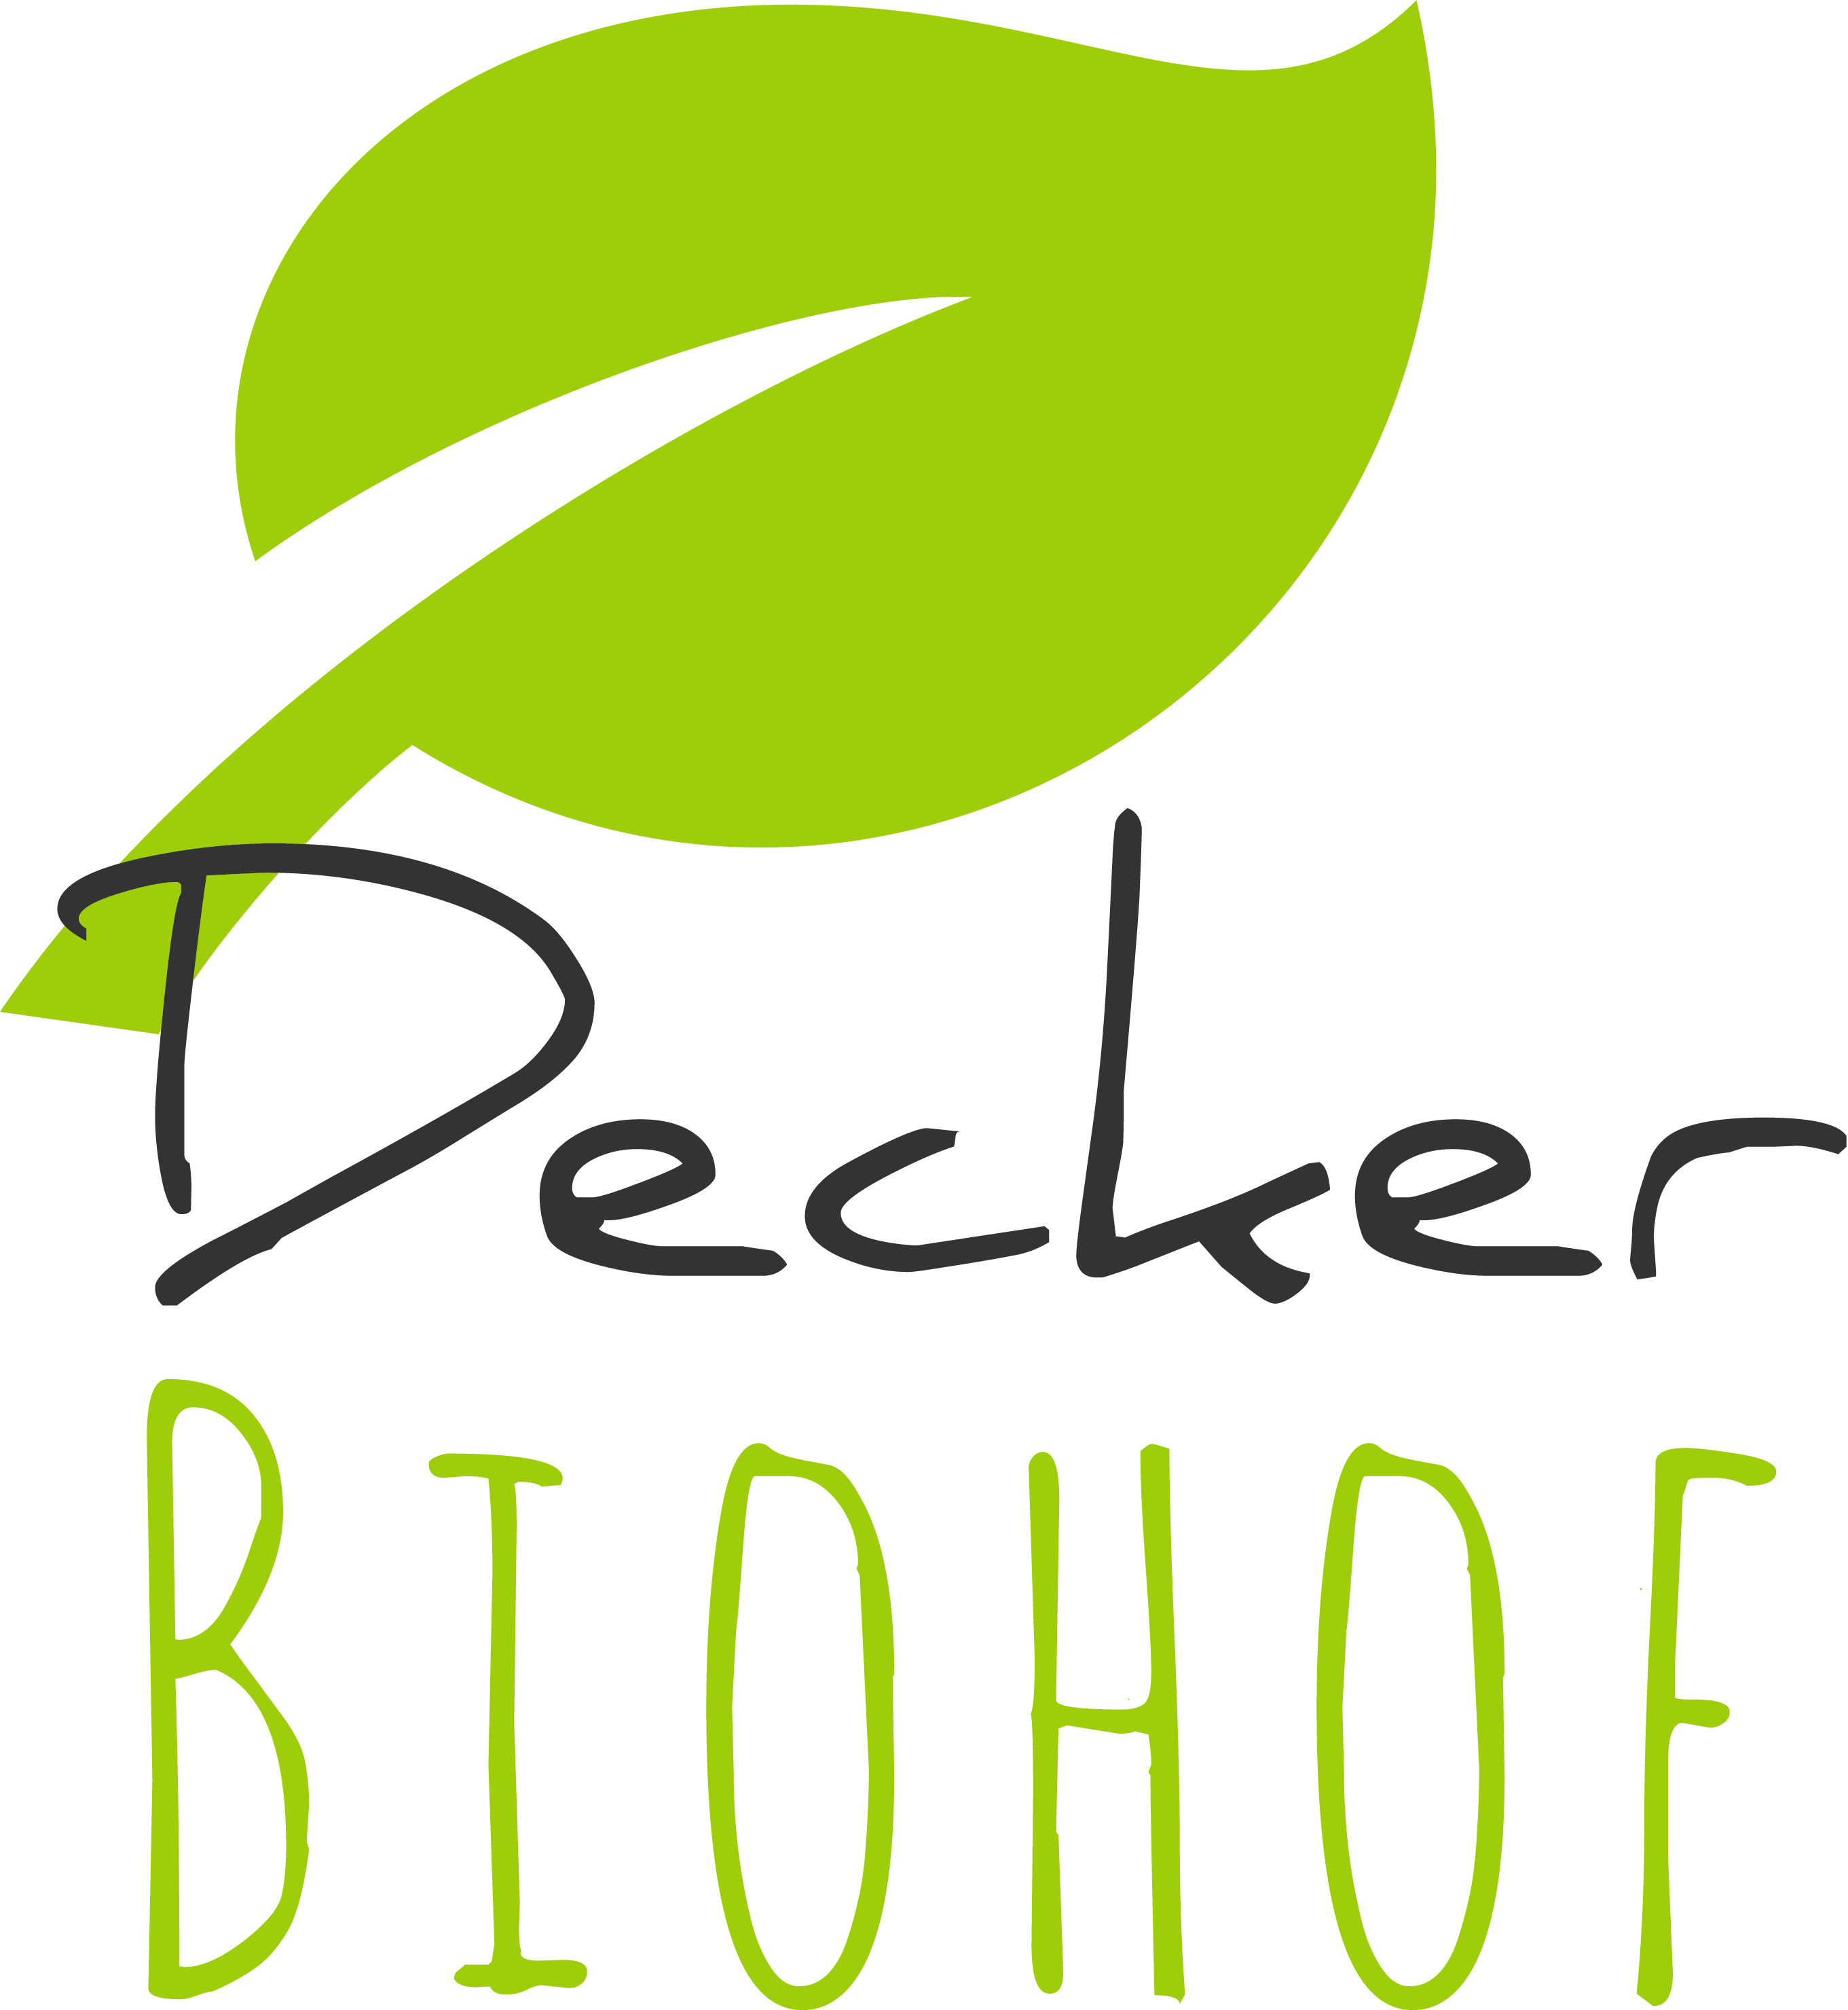 Biohof Decker